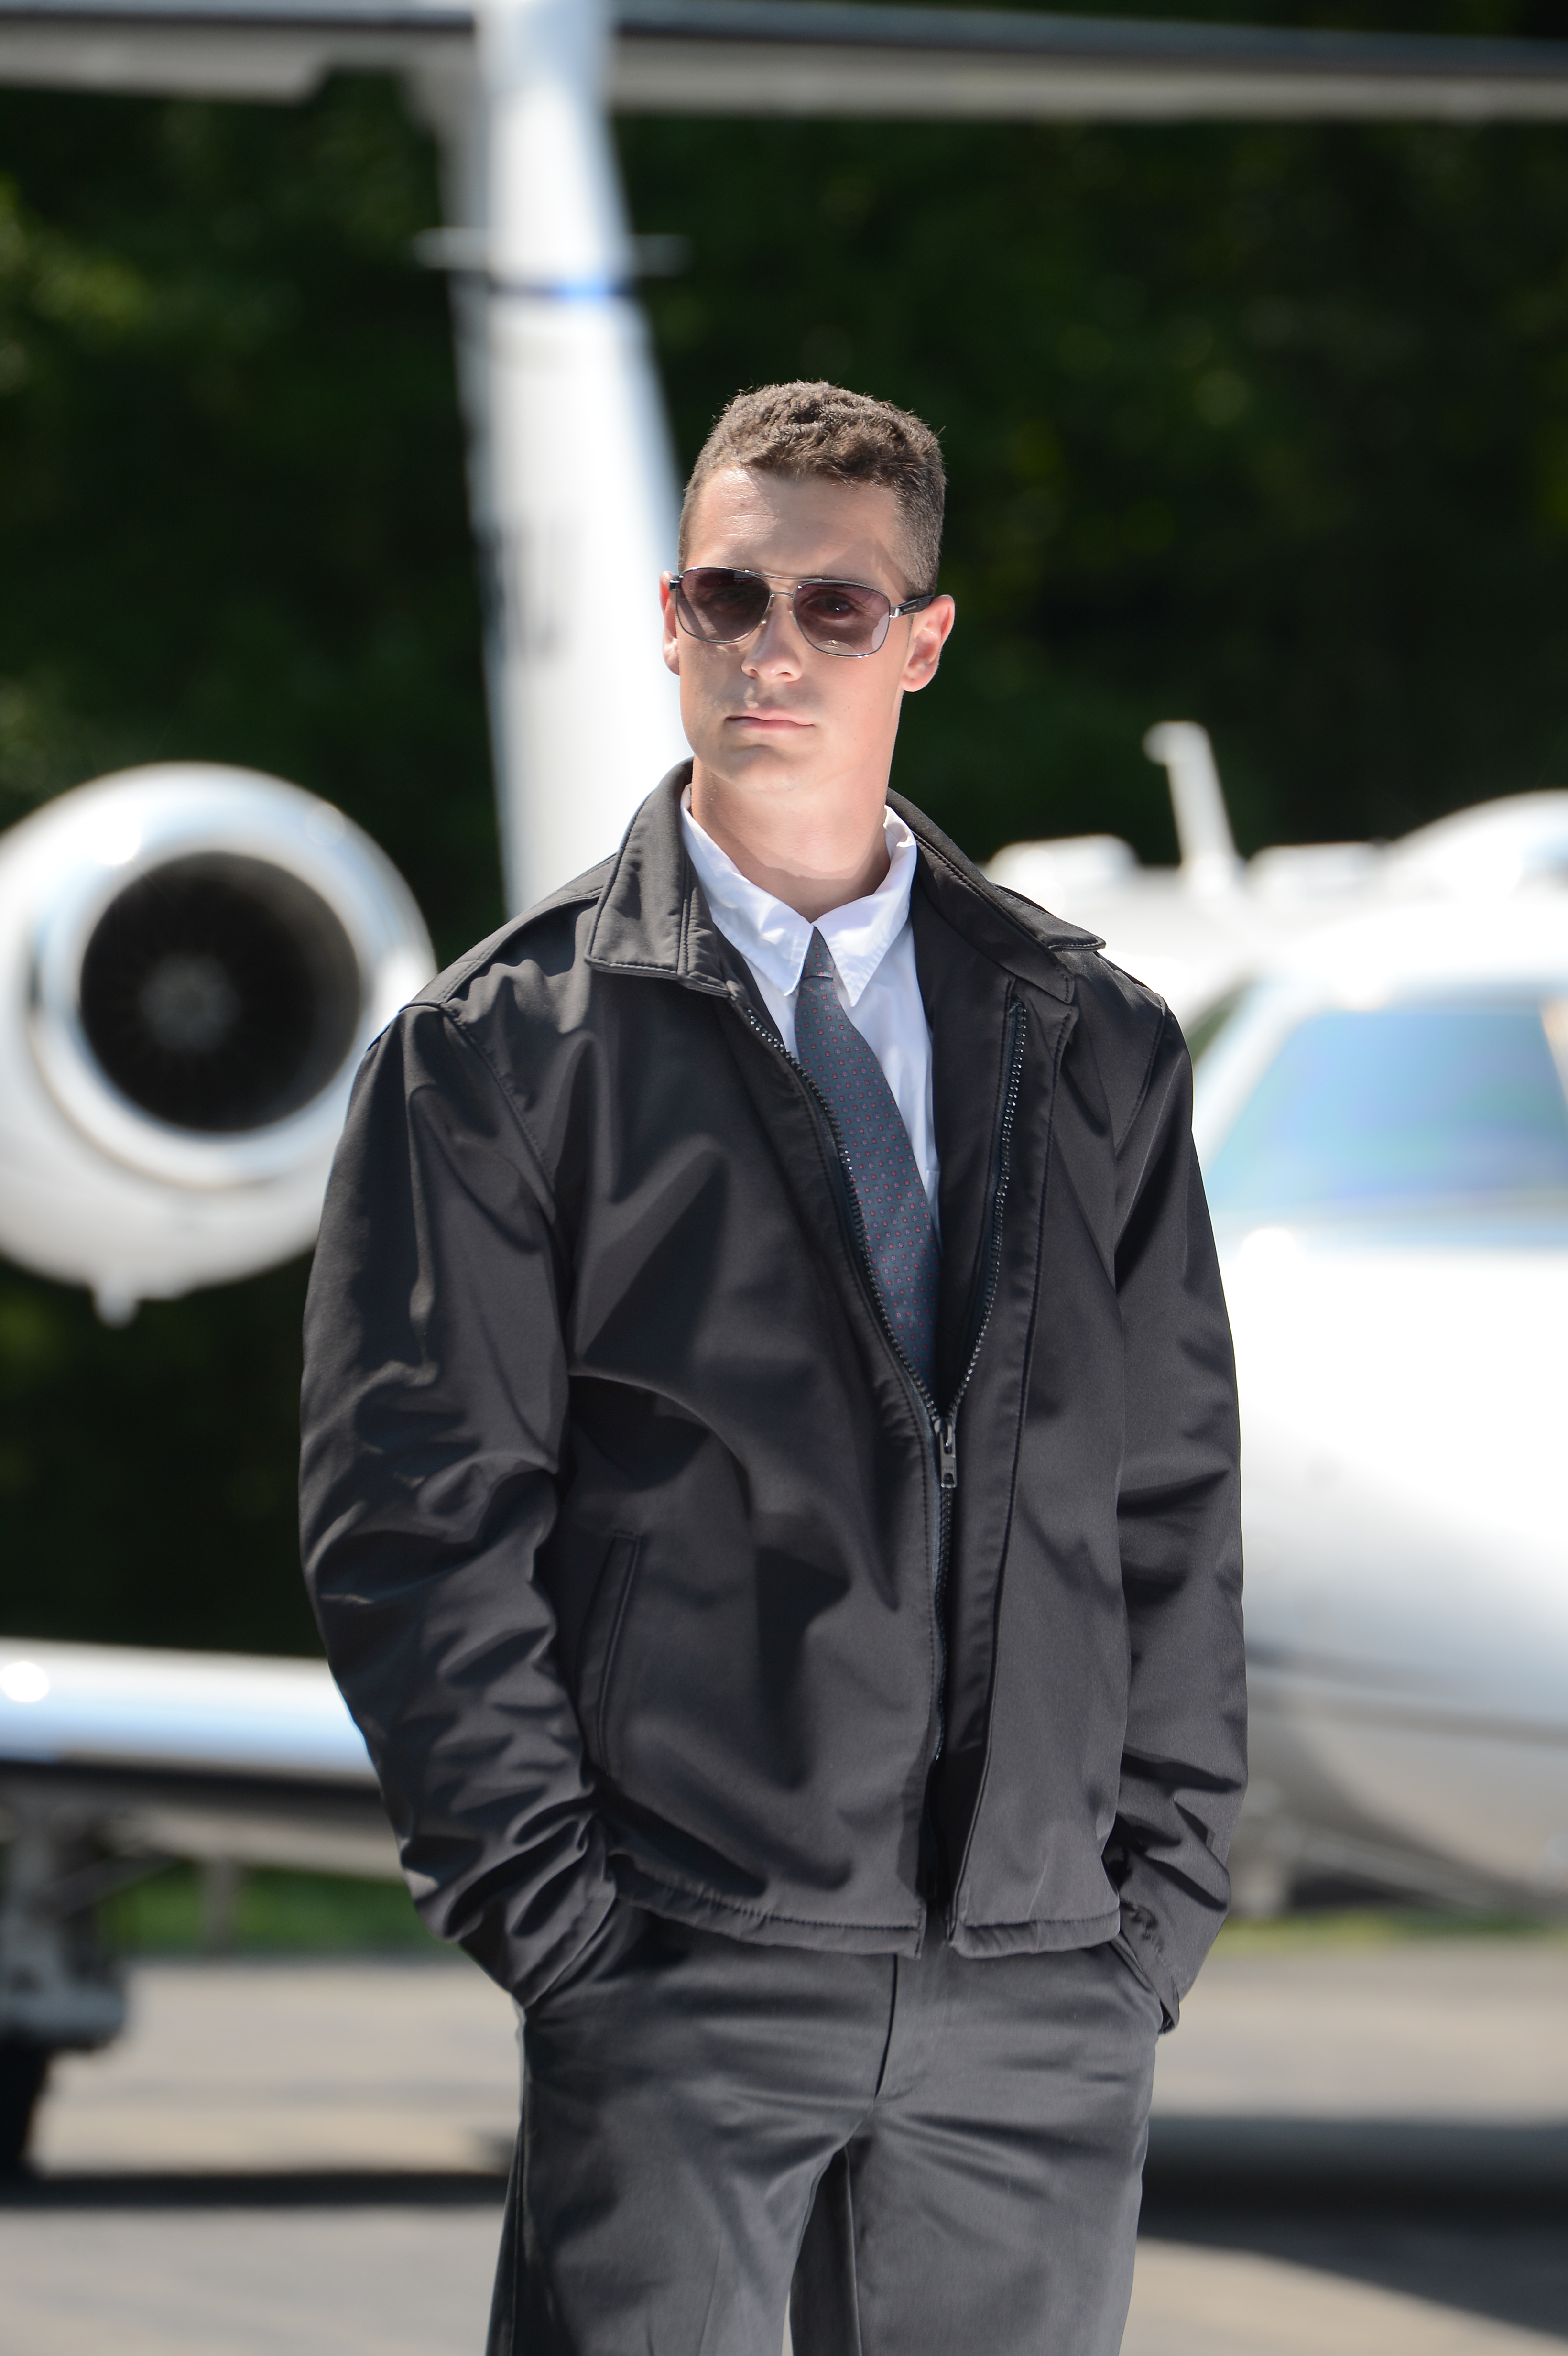 Professional Aviator’s Flight Jacket – Perrone Apparel3280 x 4928